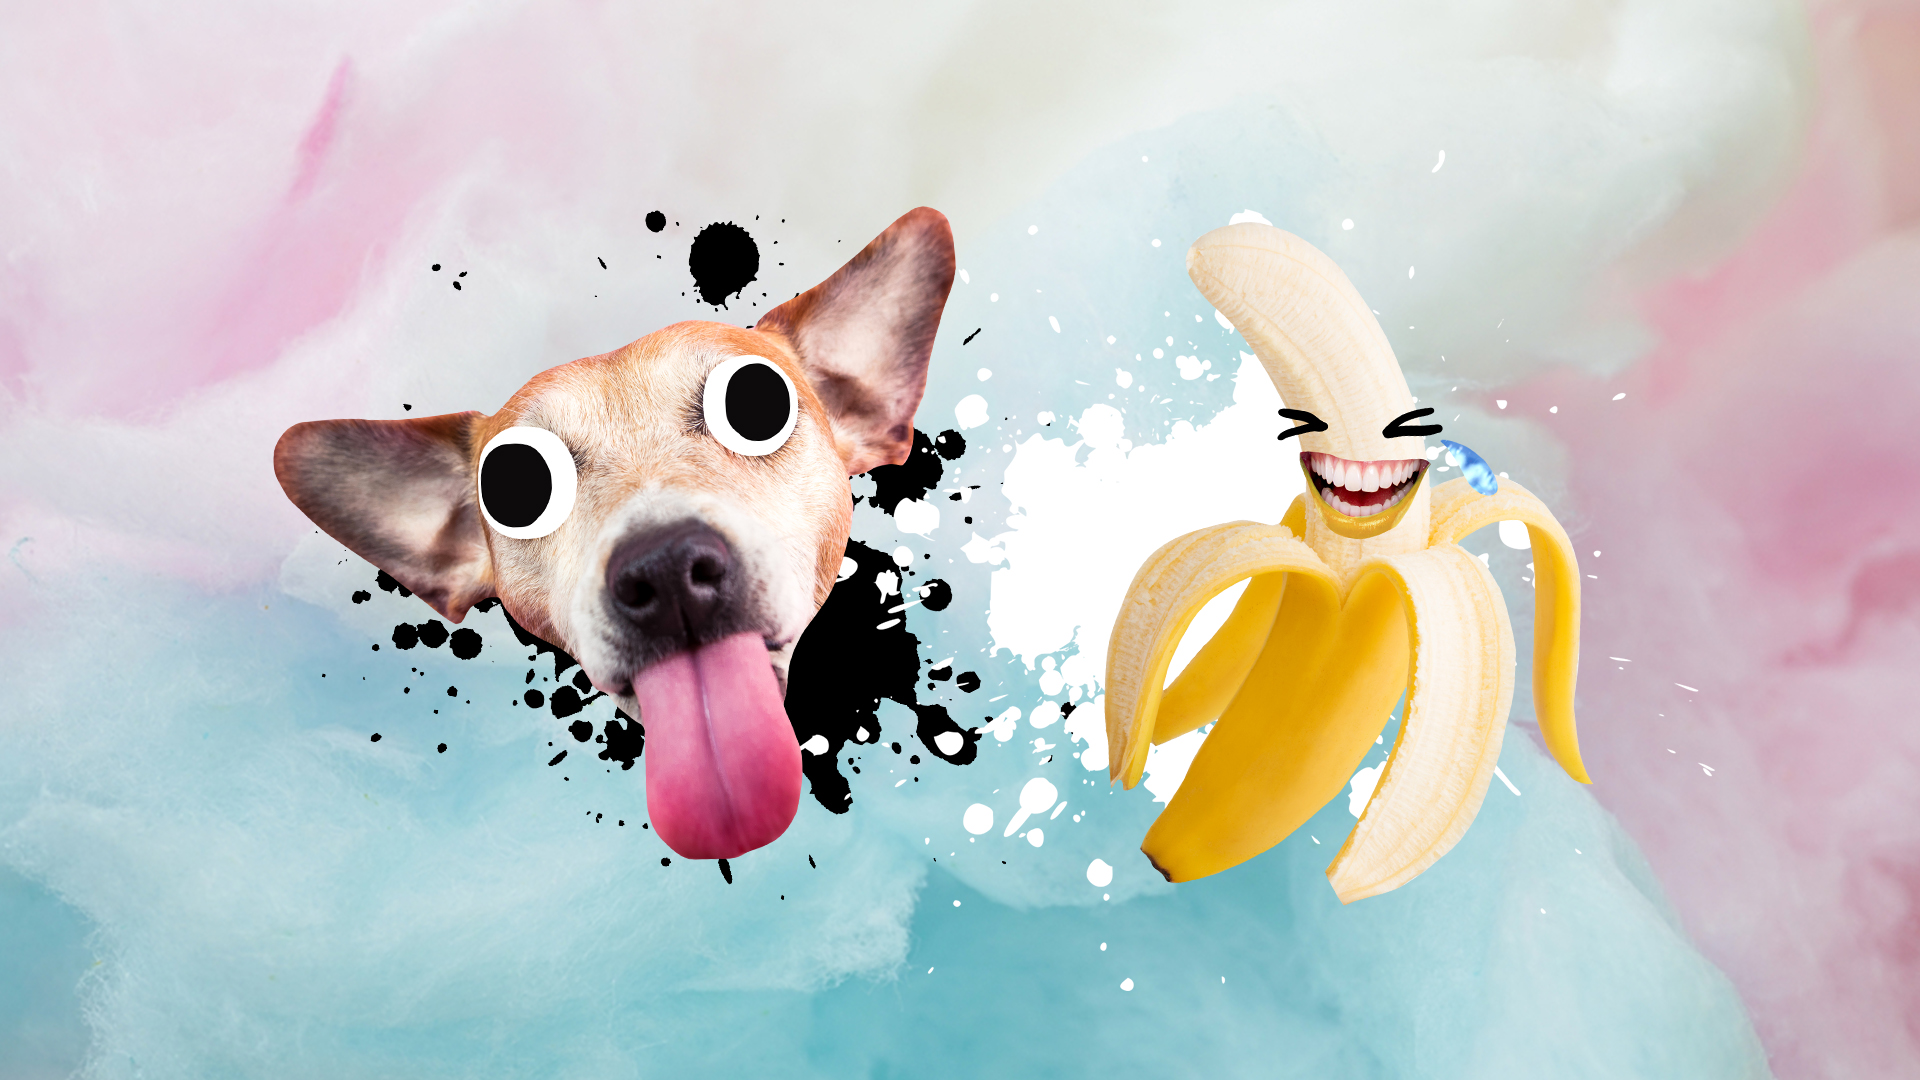 A laughing banana and a cheeky dog